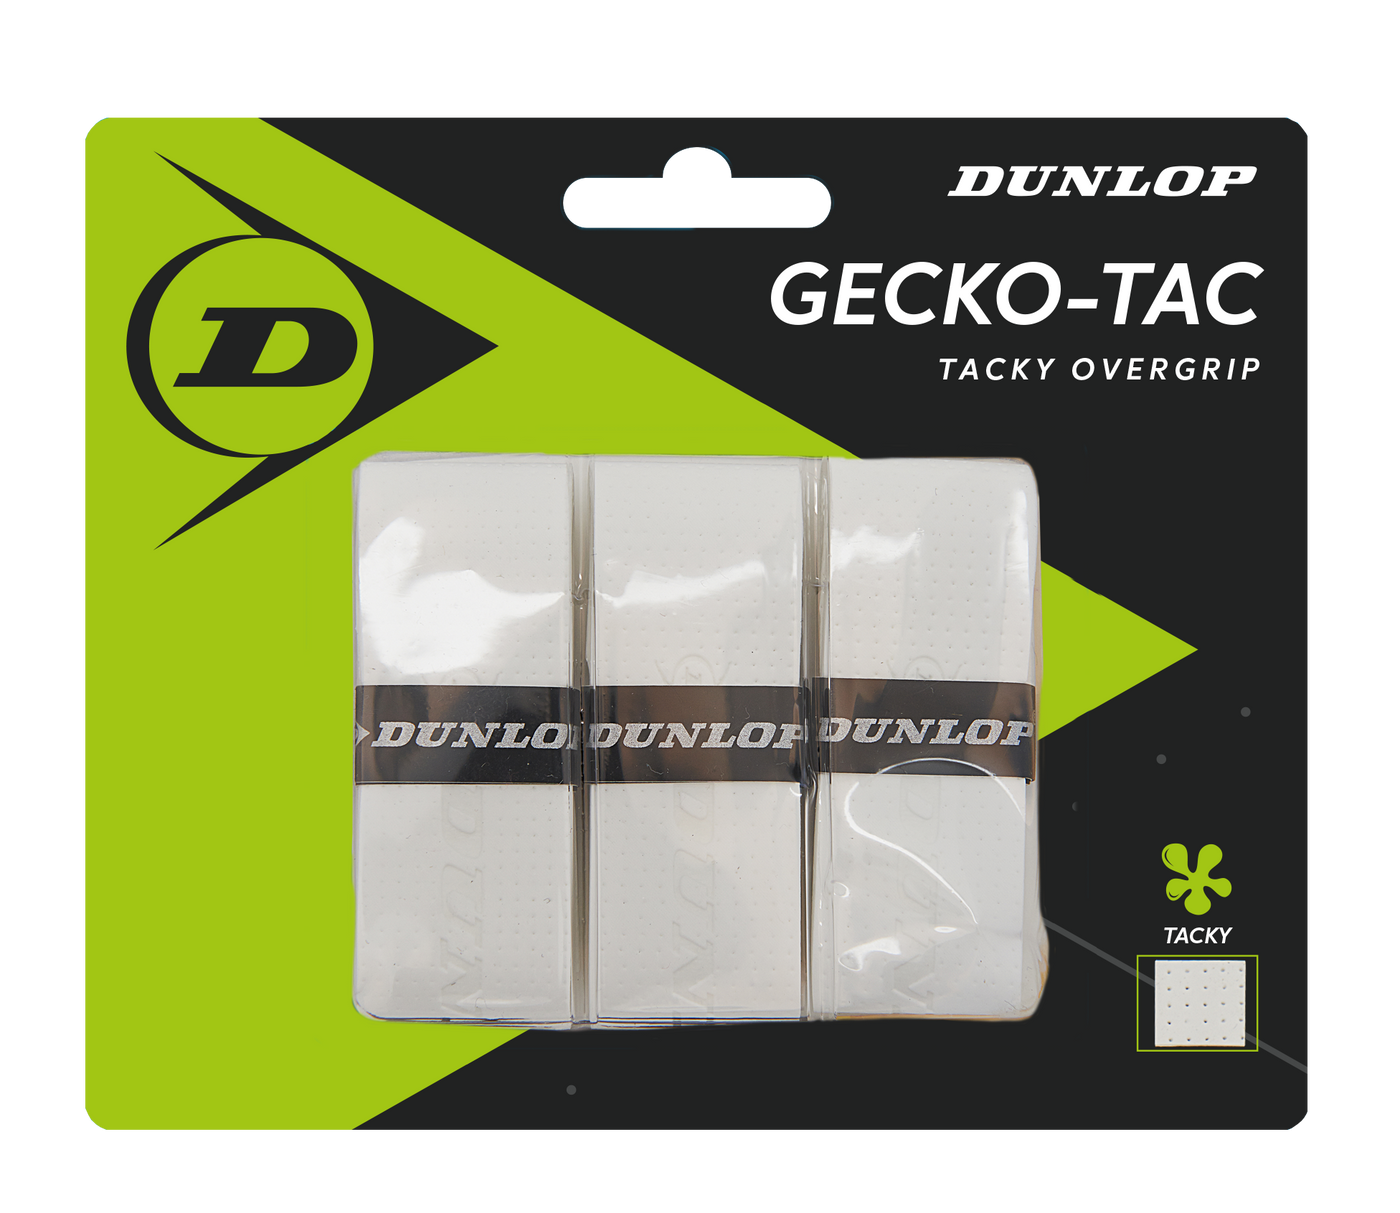 Dunlop Gecko Tac Overgrip 3 Pack - White